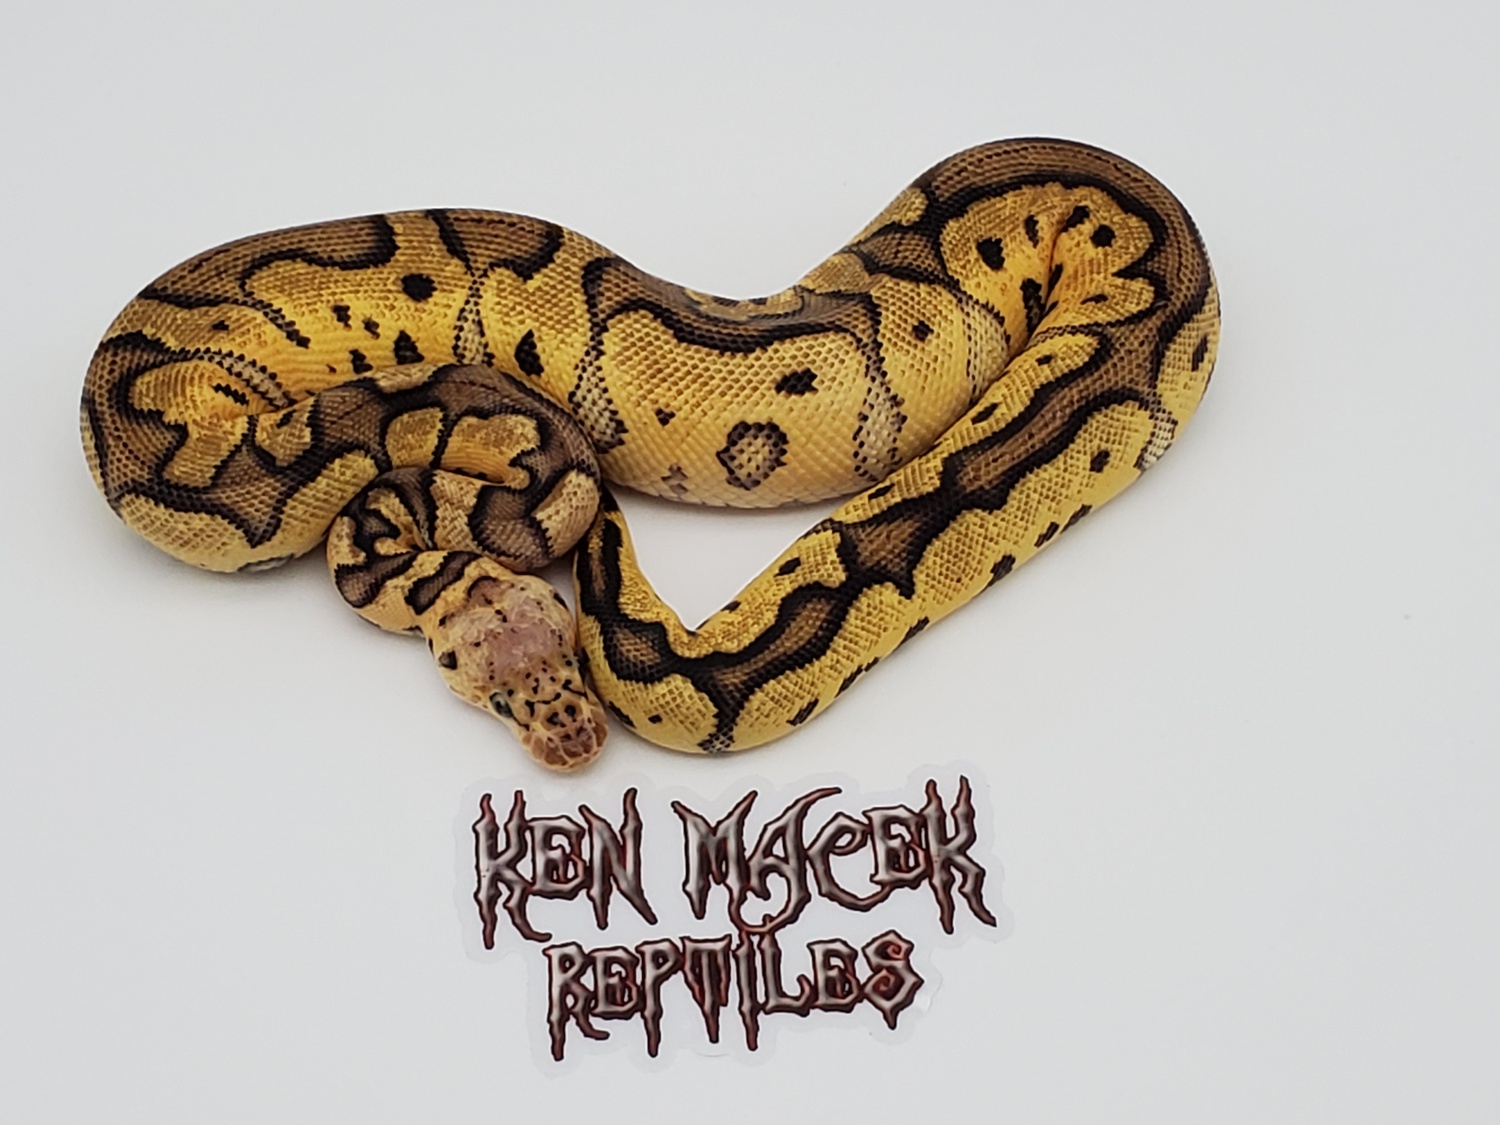 Pastel Motley Bongo Clown Ball Python by Ken Macek Reptiles